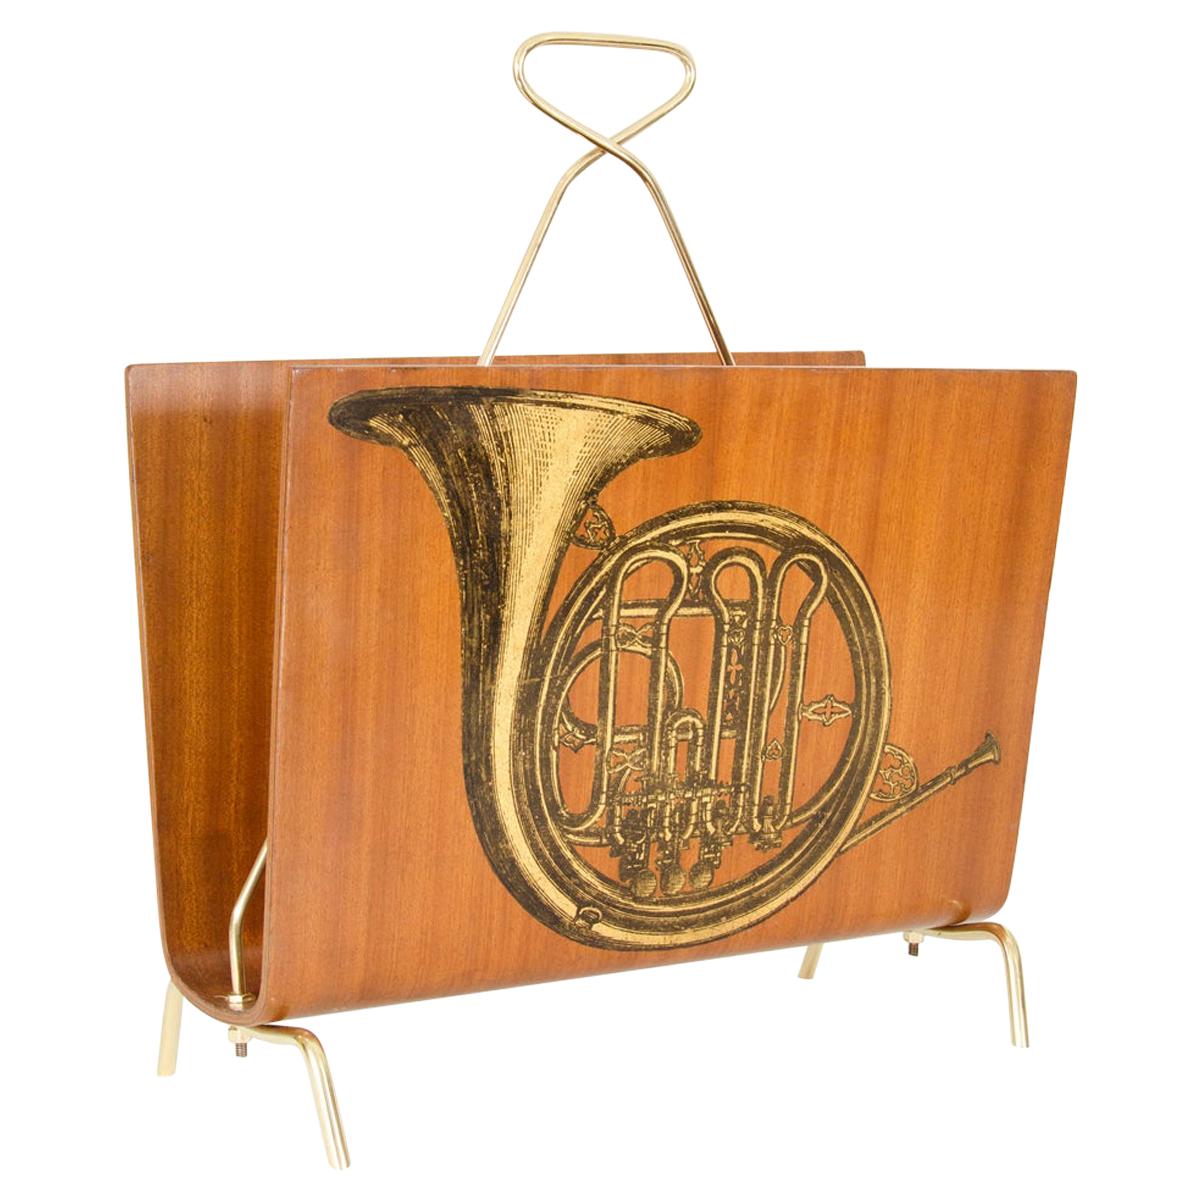 Blonde Wood Magazine Rack with Musical Instrument Design